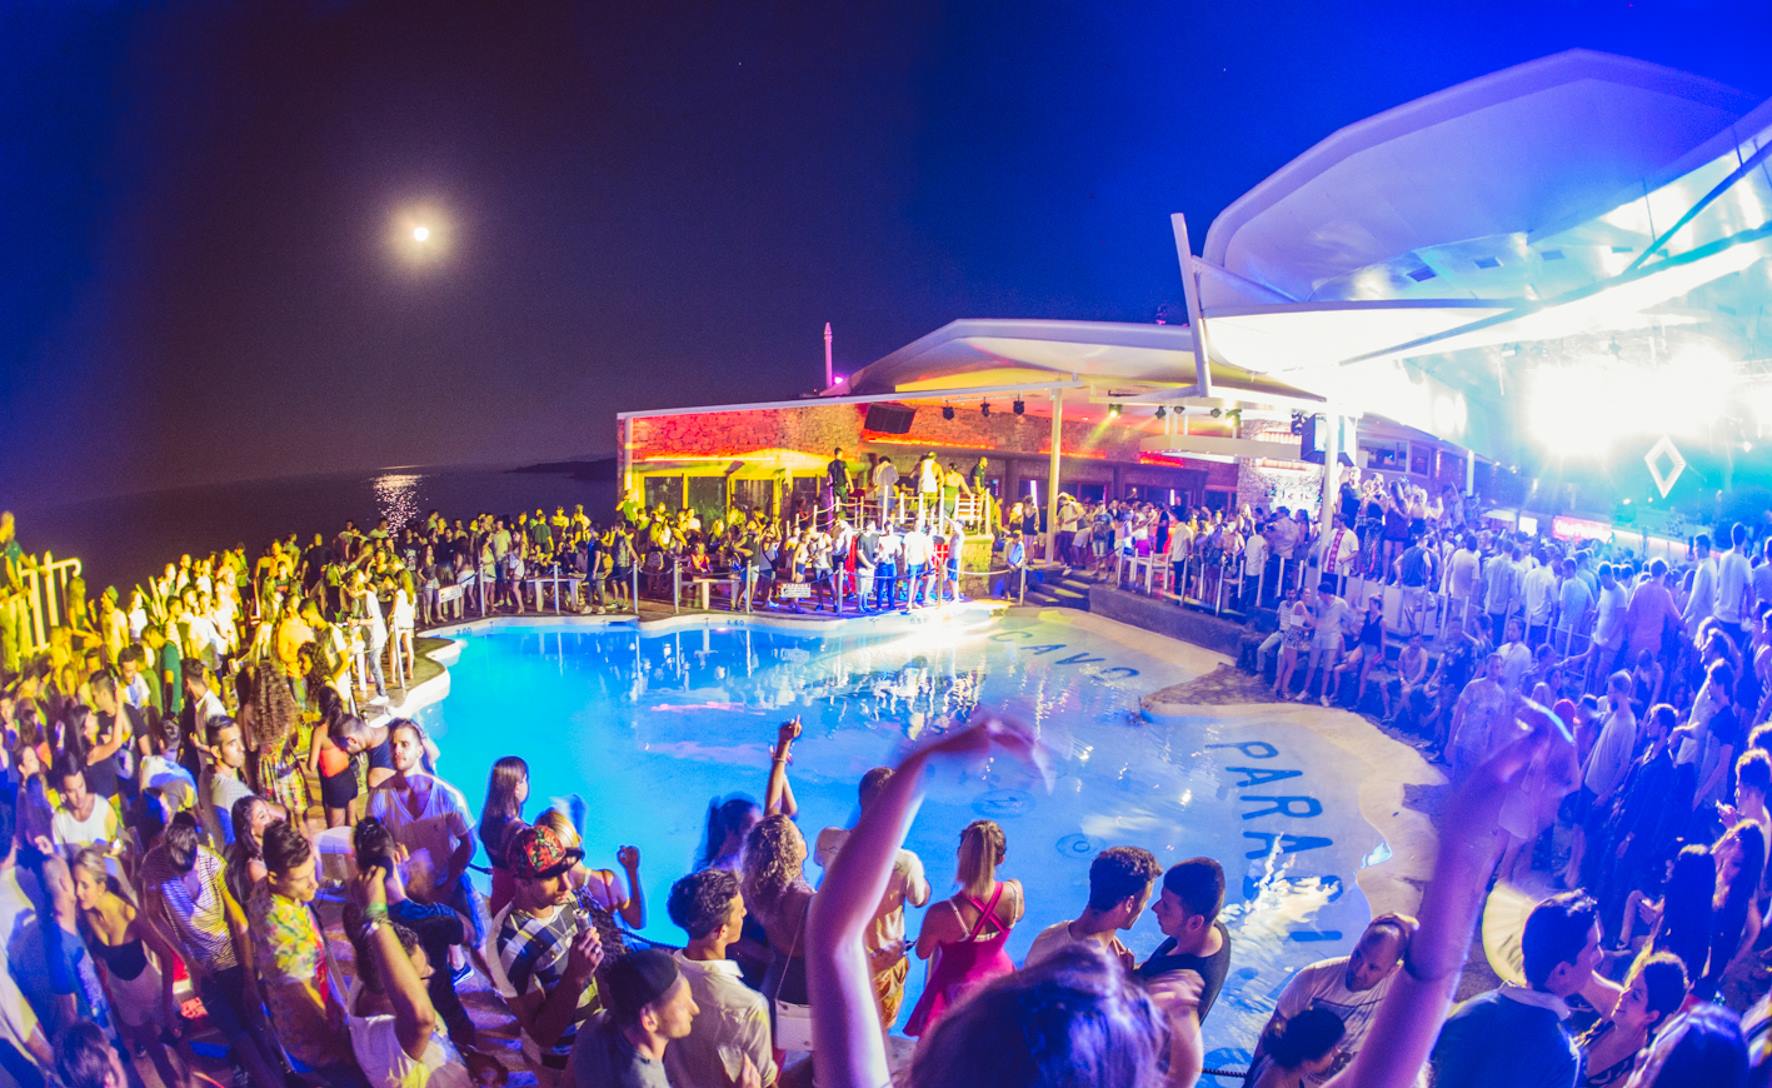 The Best Greek Islands To Visit Based On Nightlife